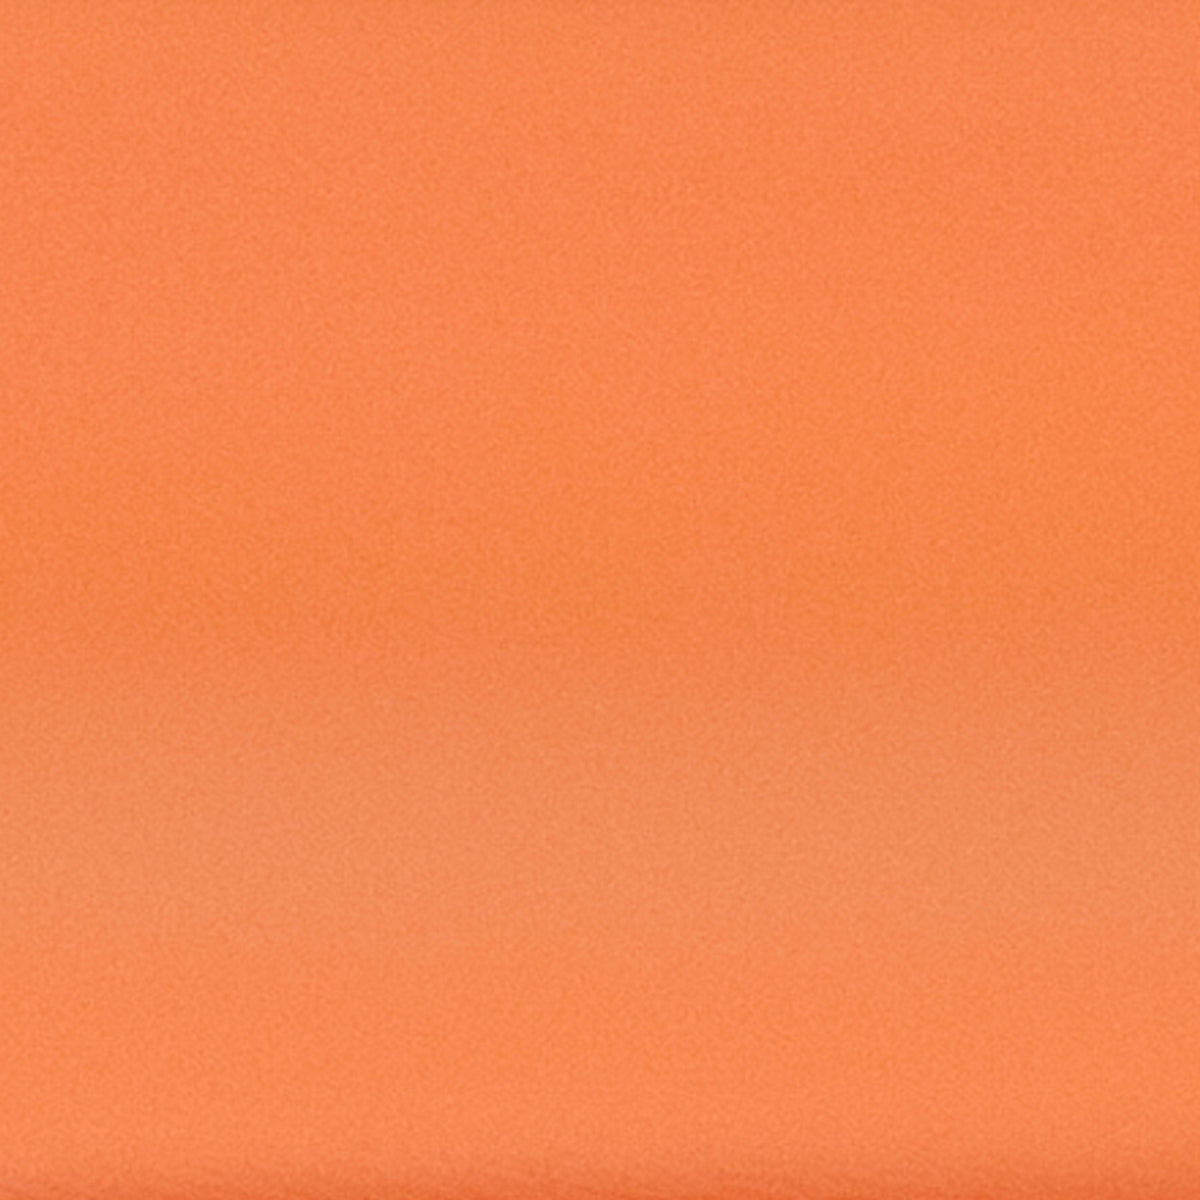 Orange |#| Orange Vinyl Adjustable Height Barstool with Solid Wave Seat and Chrome Base